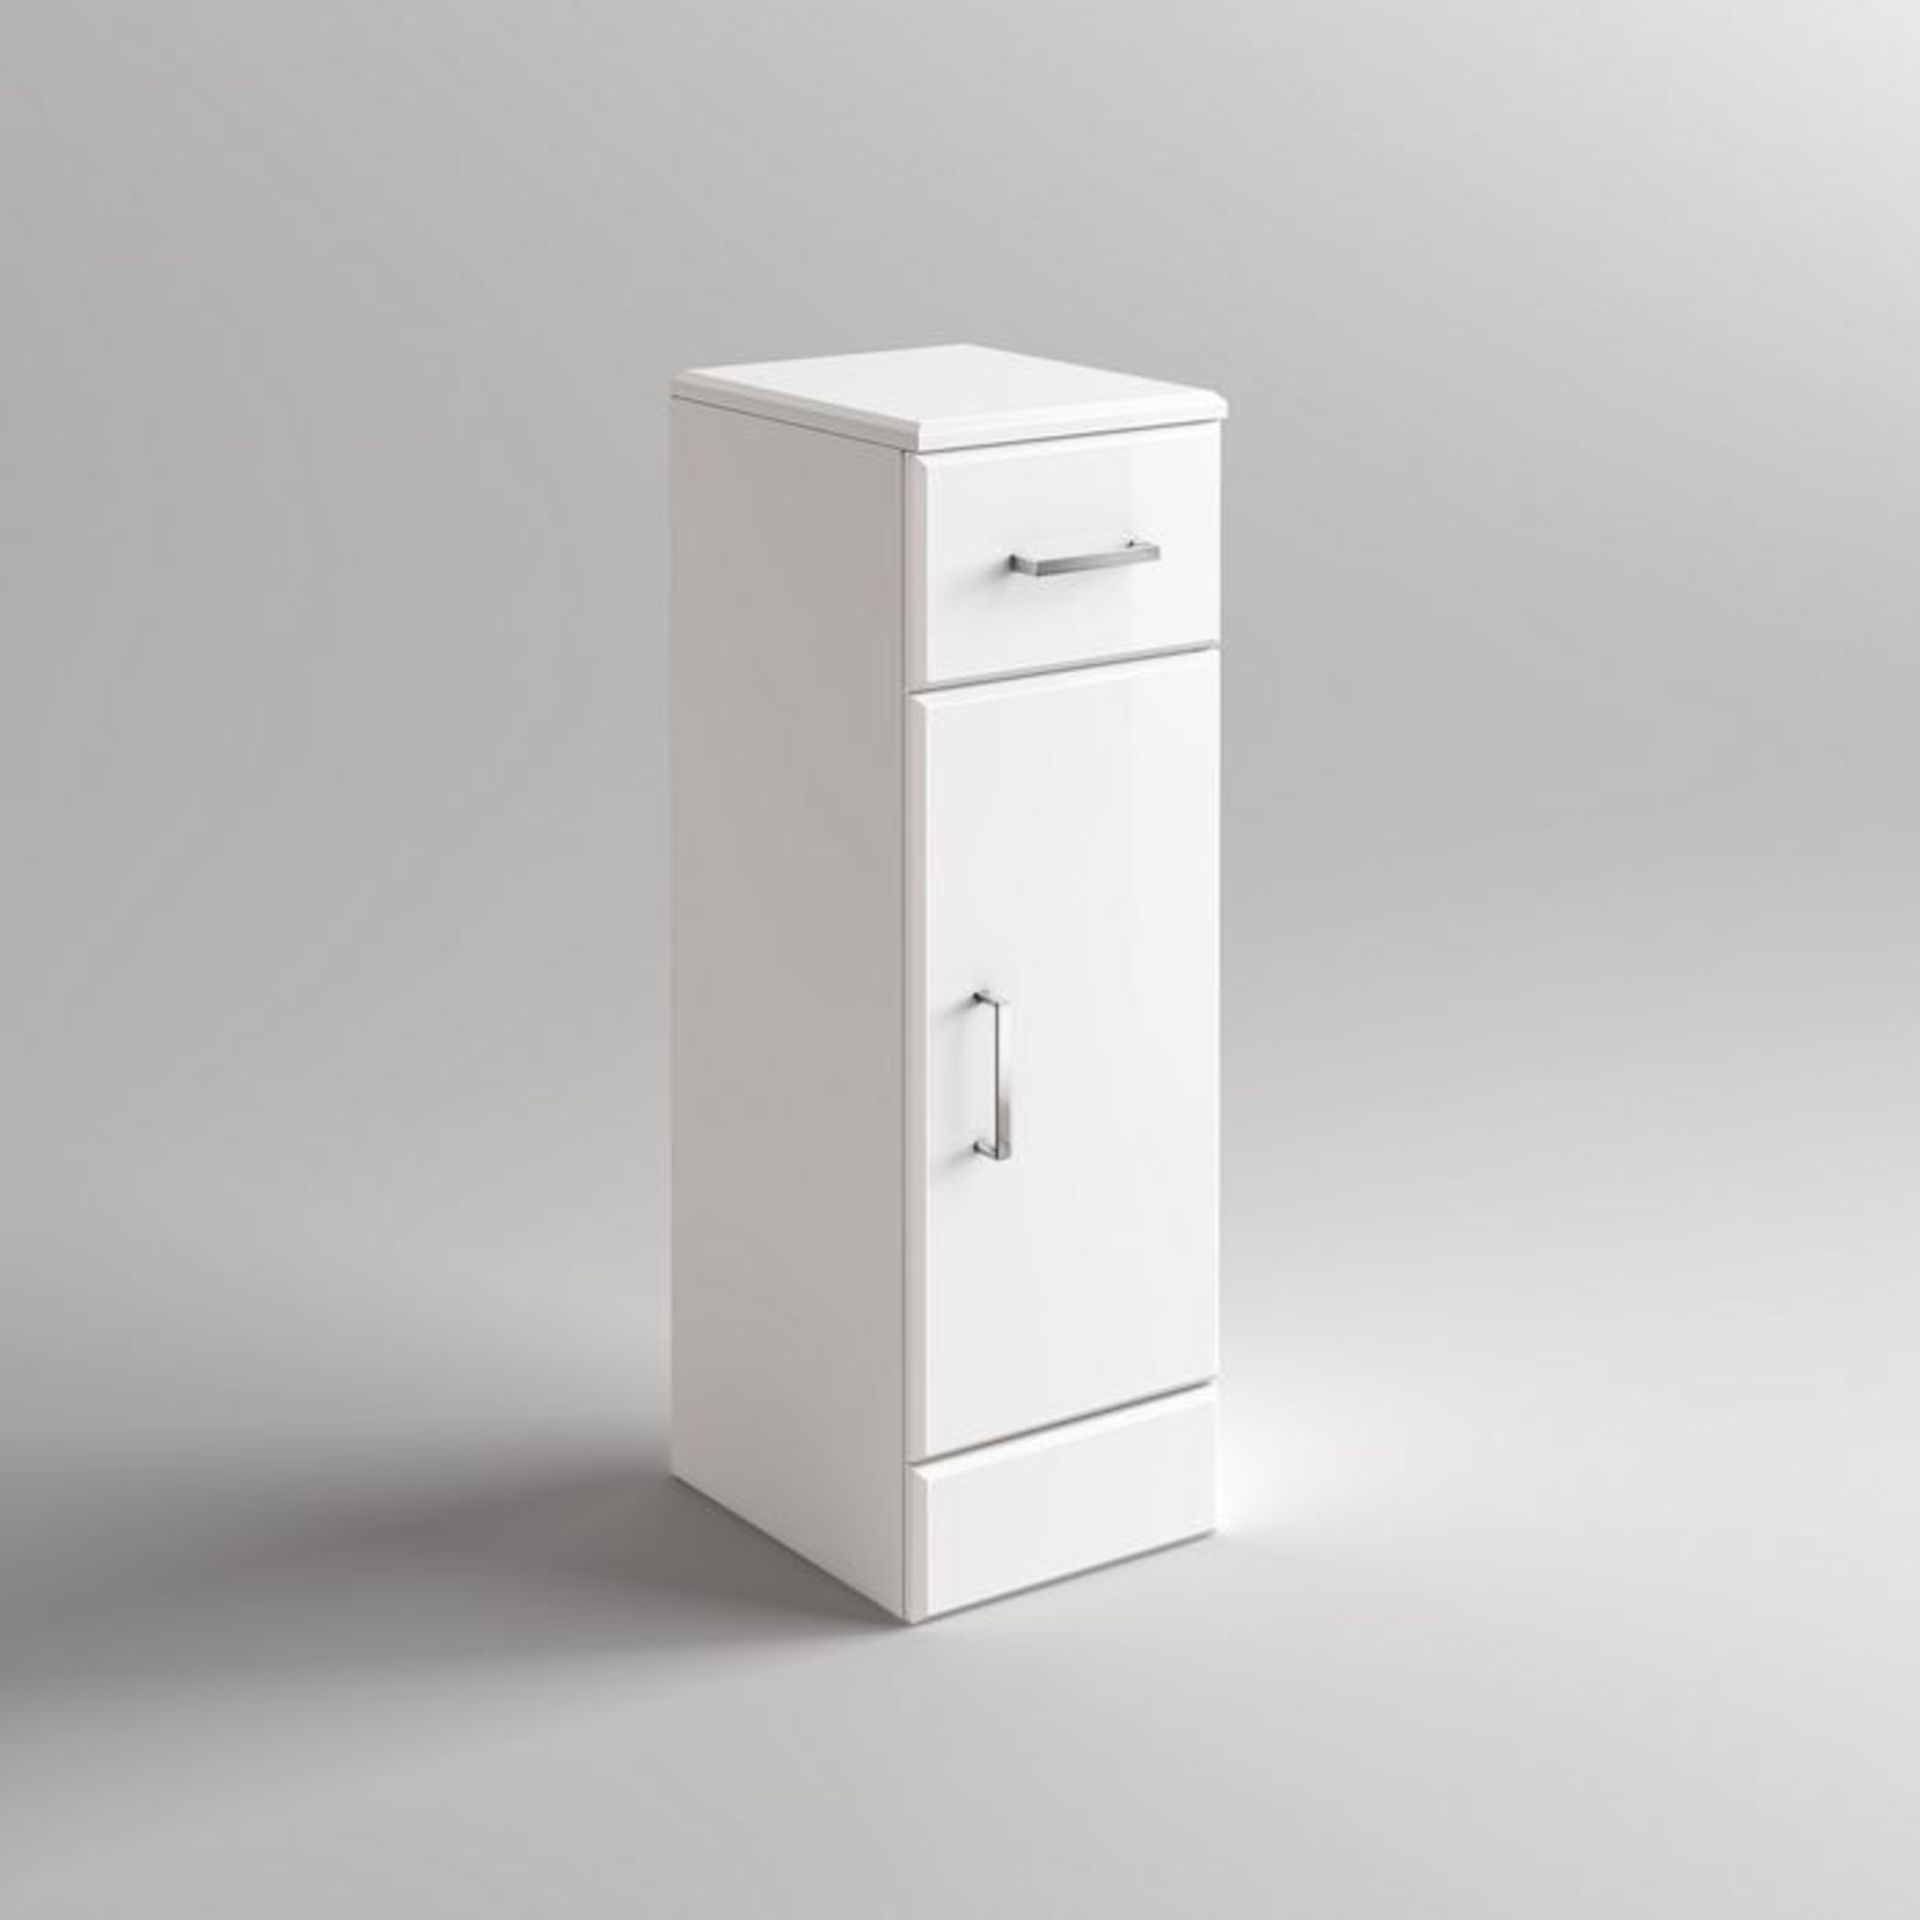 (DK18) 250x300mm Quartz Gloss White Small Side Cabinet Unit. Pristine gloss white finish Great - Image 3 of 5